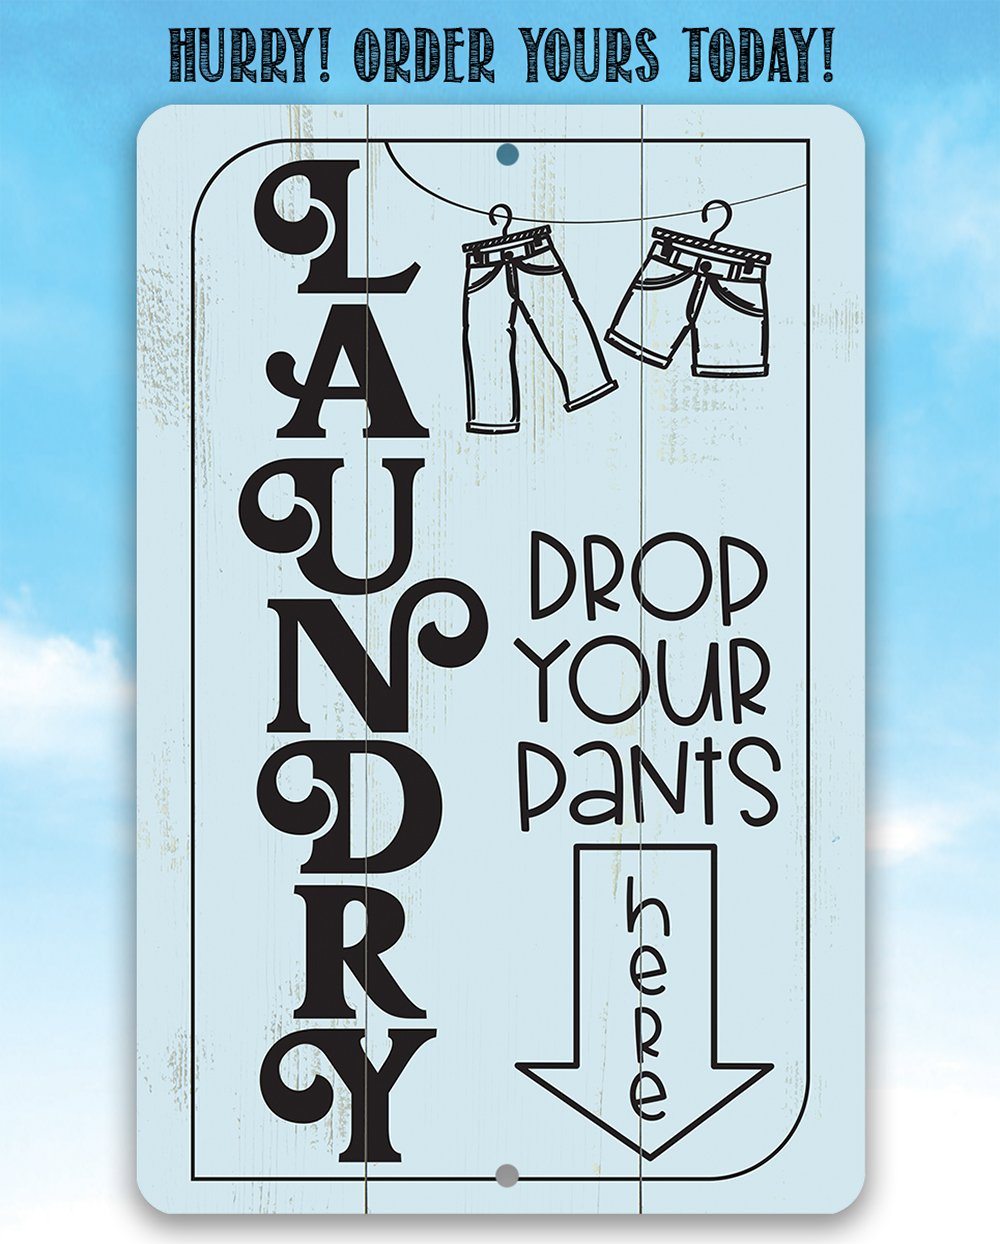 Laundry Drop Pants Here - Metal Sign | Lone Star Art.